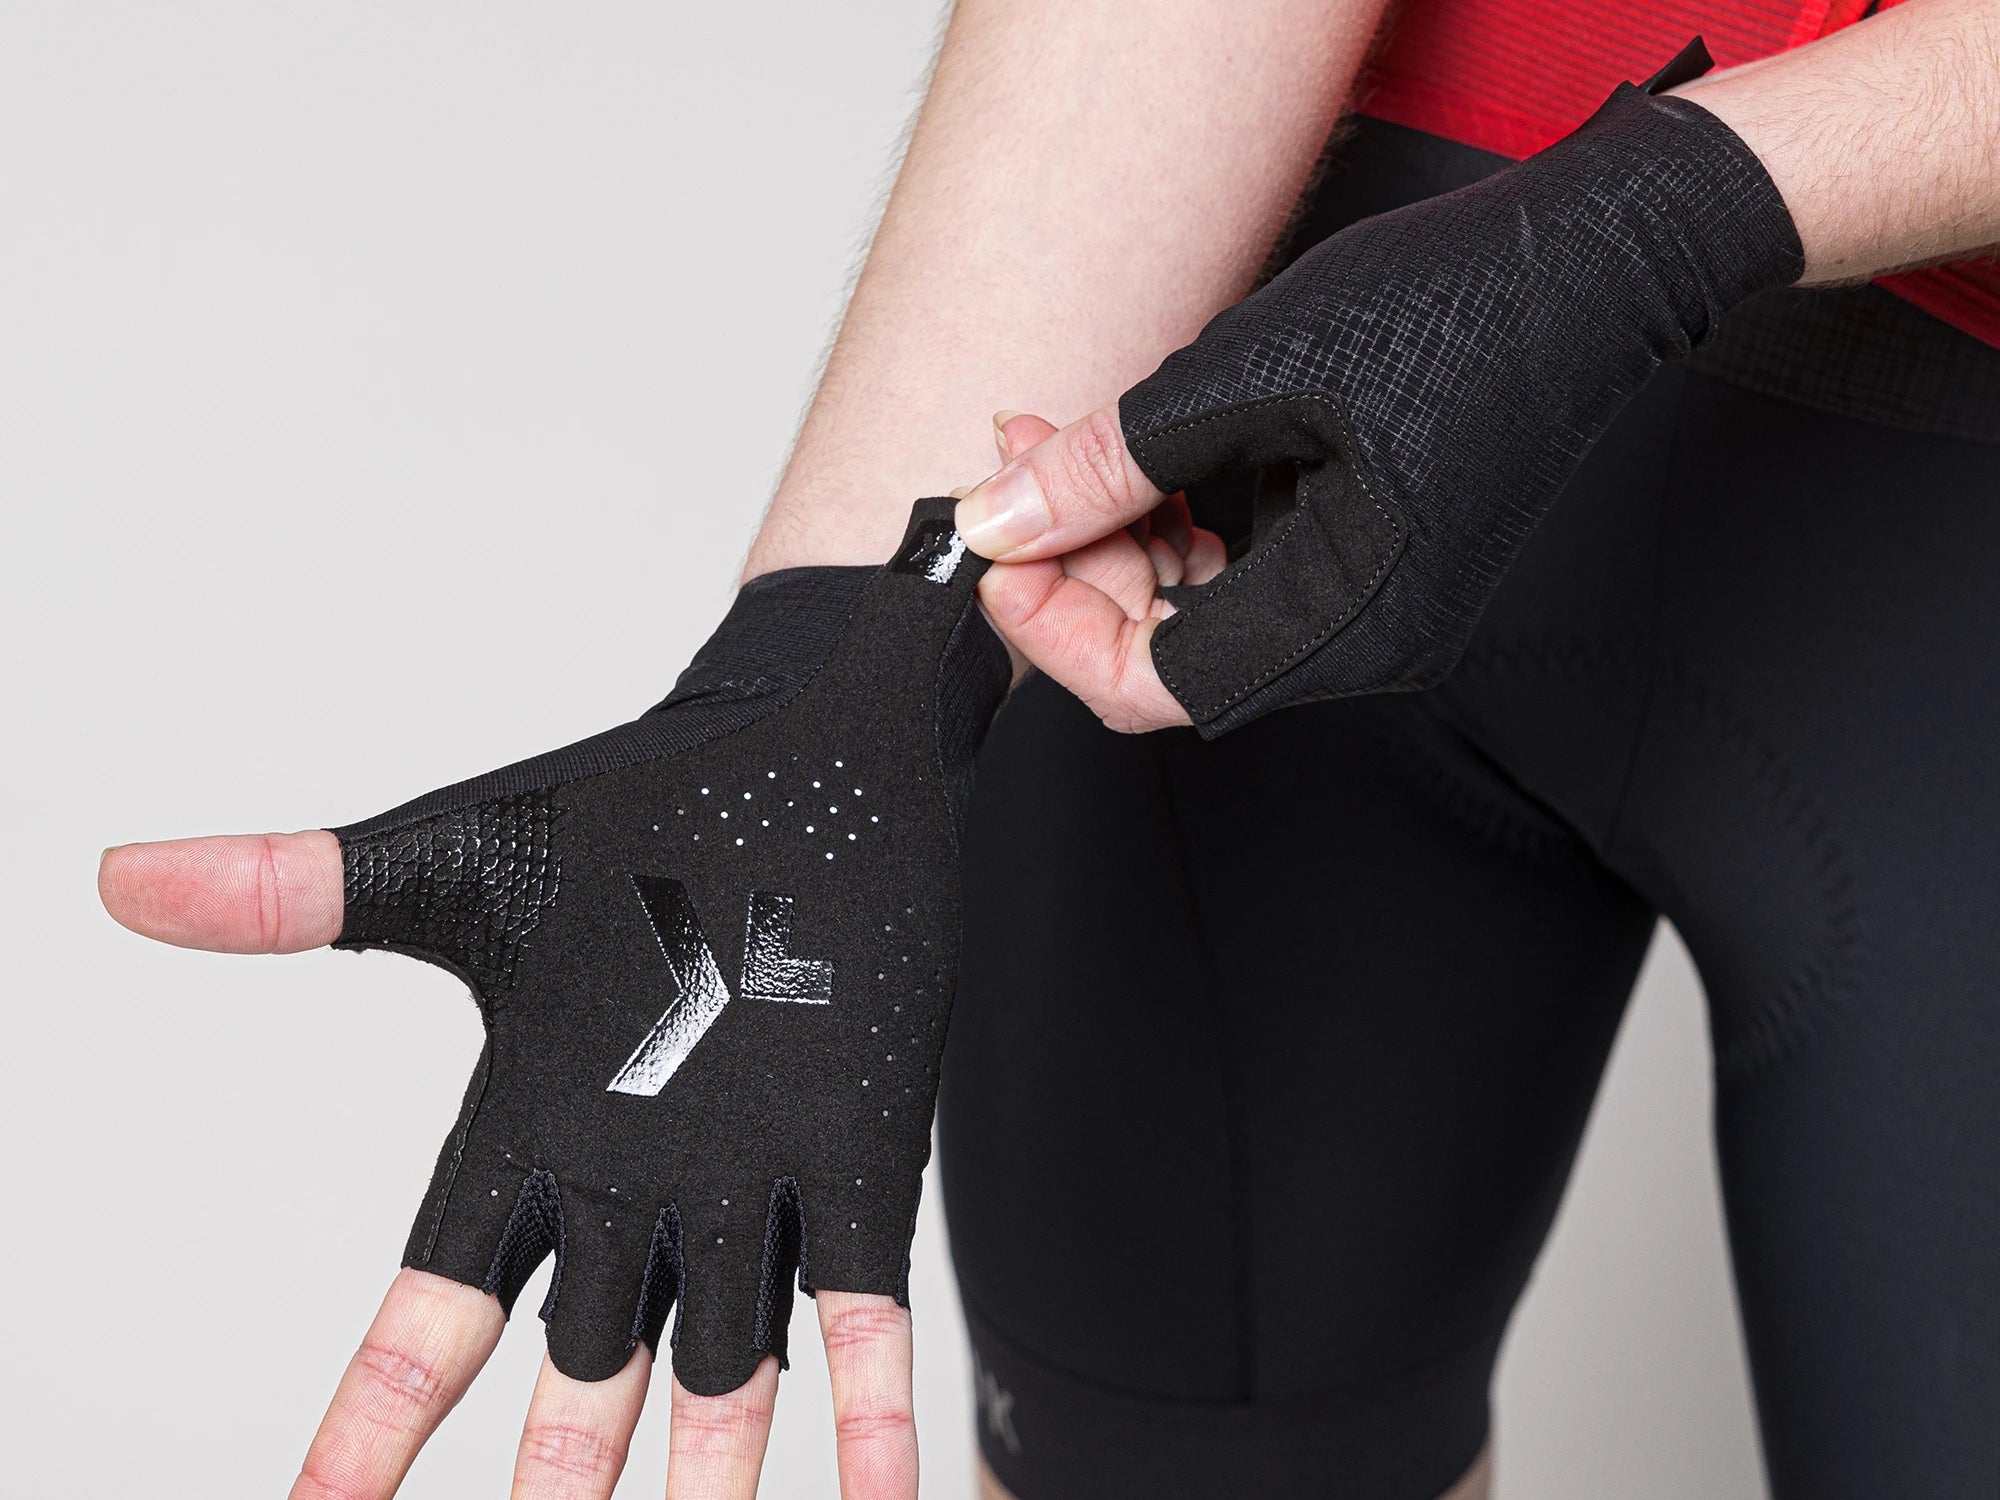 Gobik Finder True Black unisex guantes térmicos ligeros - Envío 24h